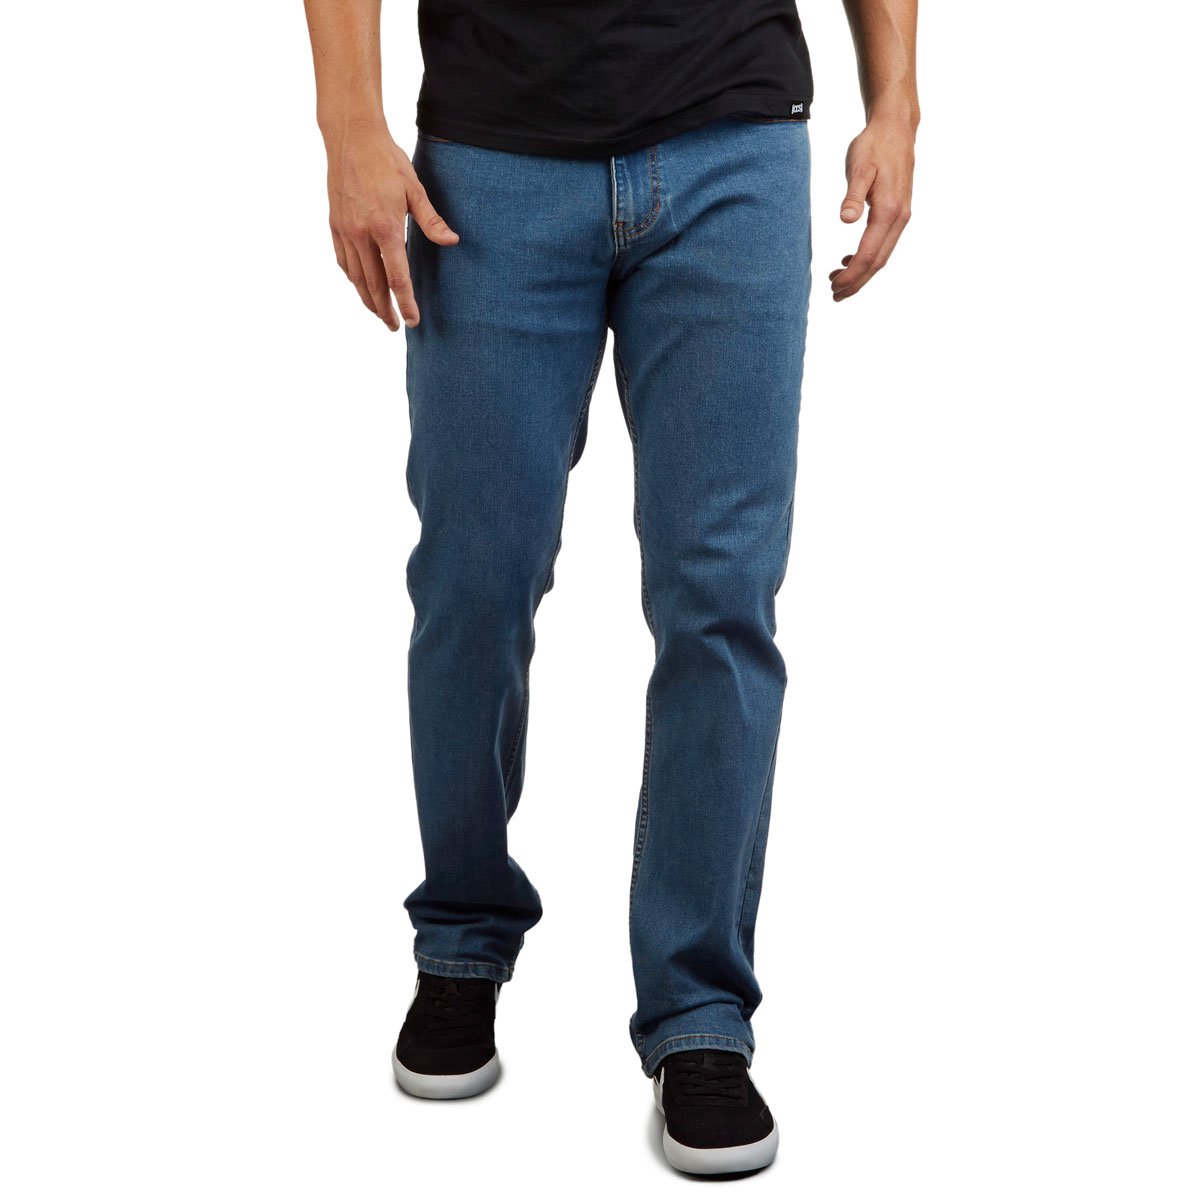 CCS Standard Plus Straight Denim Jeans - New Rinse image 1